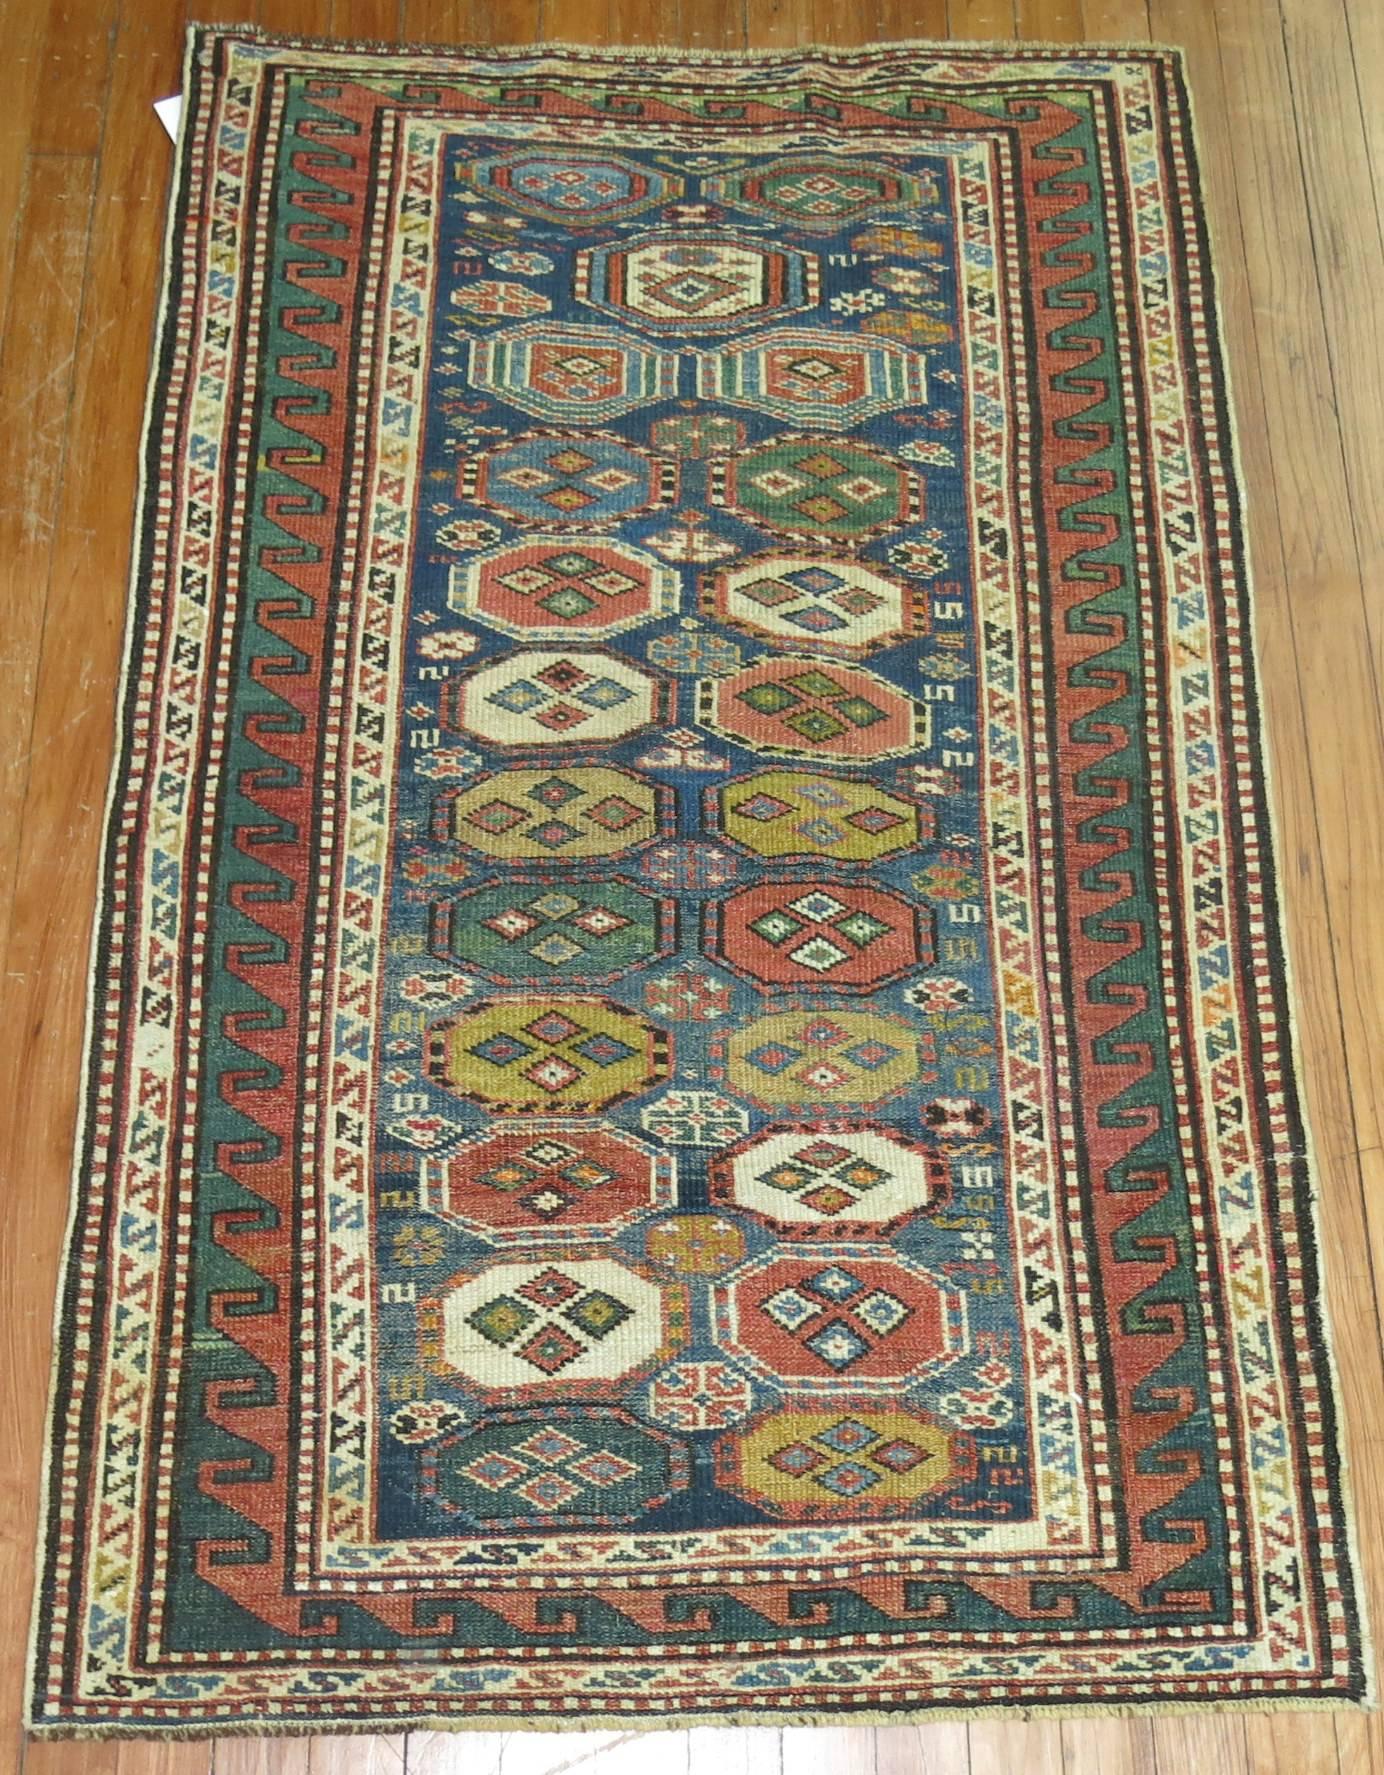 An early 20th century Caucasian rug.